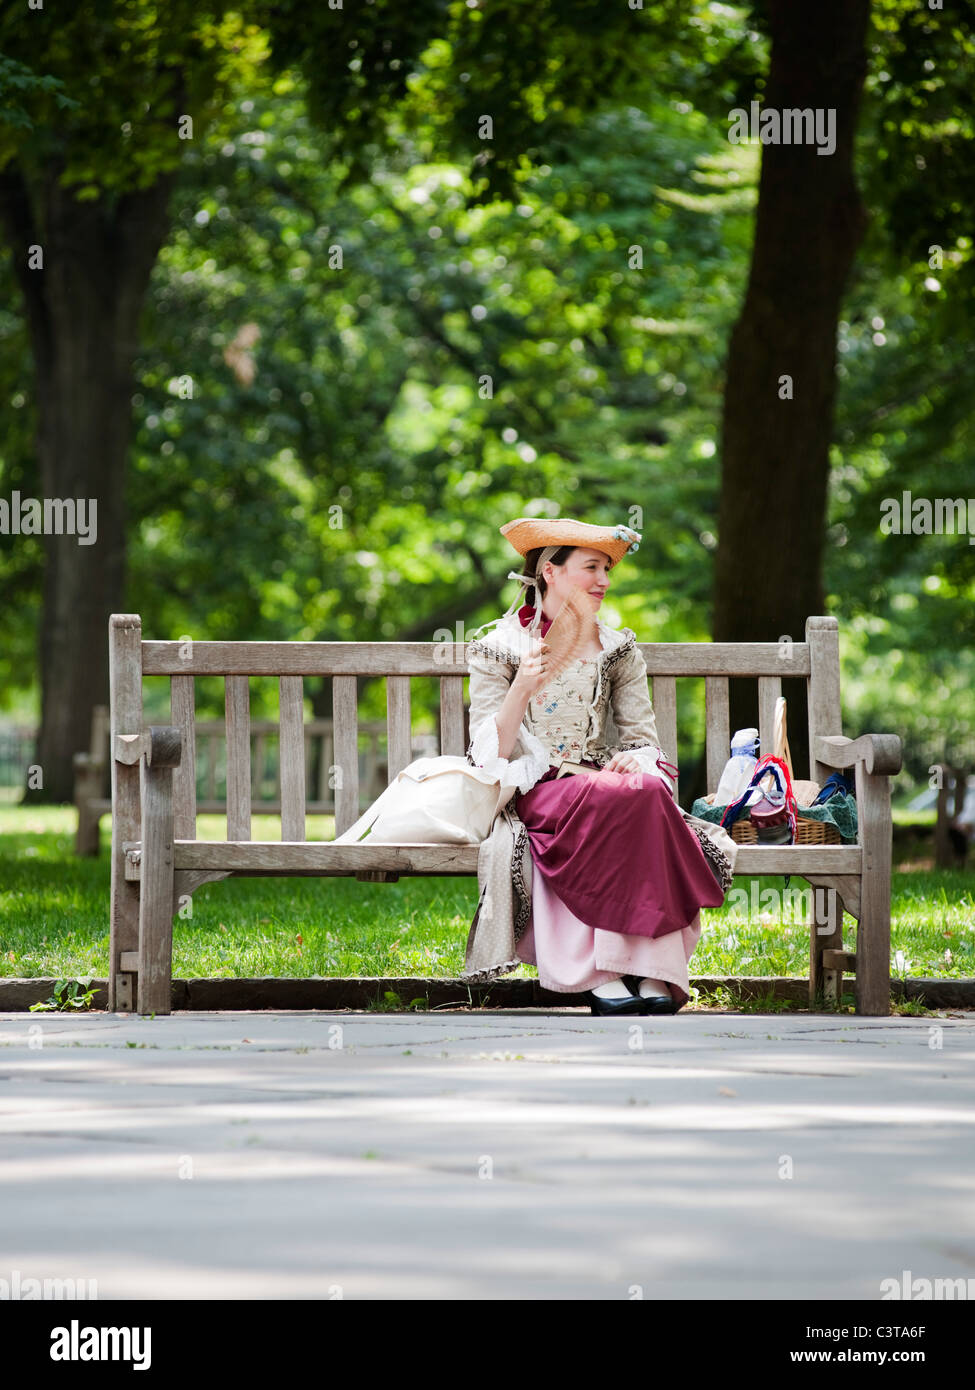 Young Girl in Period Costume, Philadelphia Stock Photo